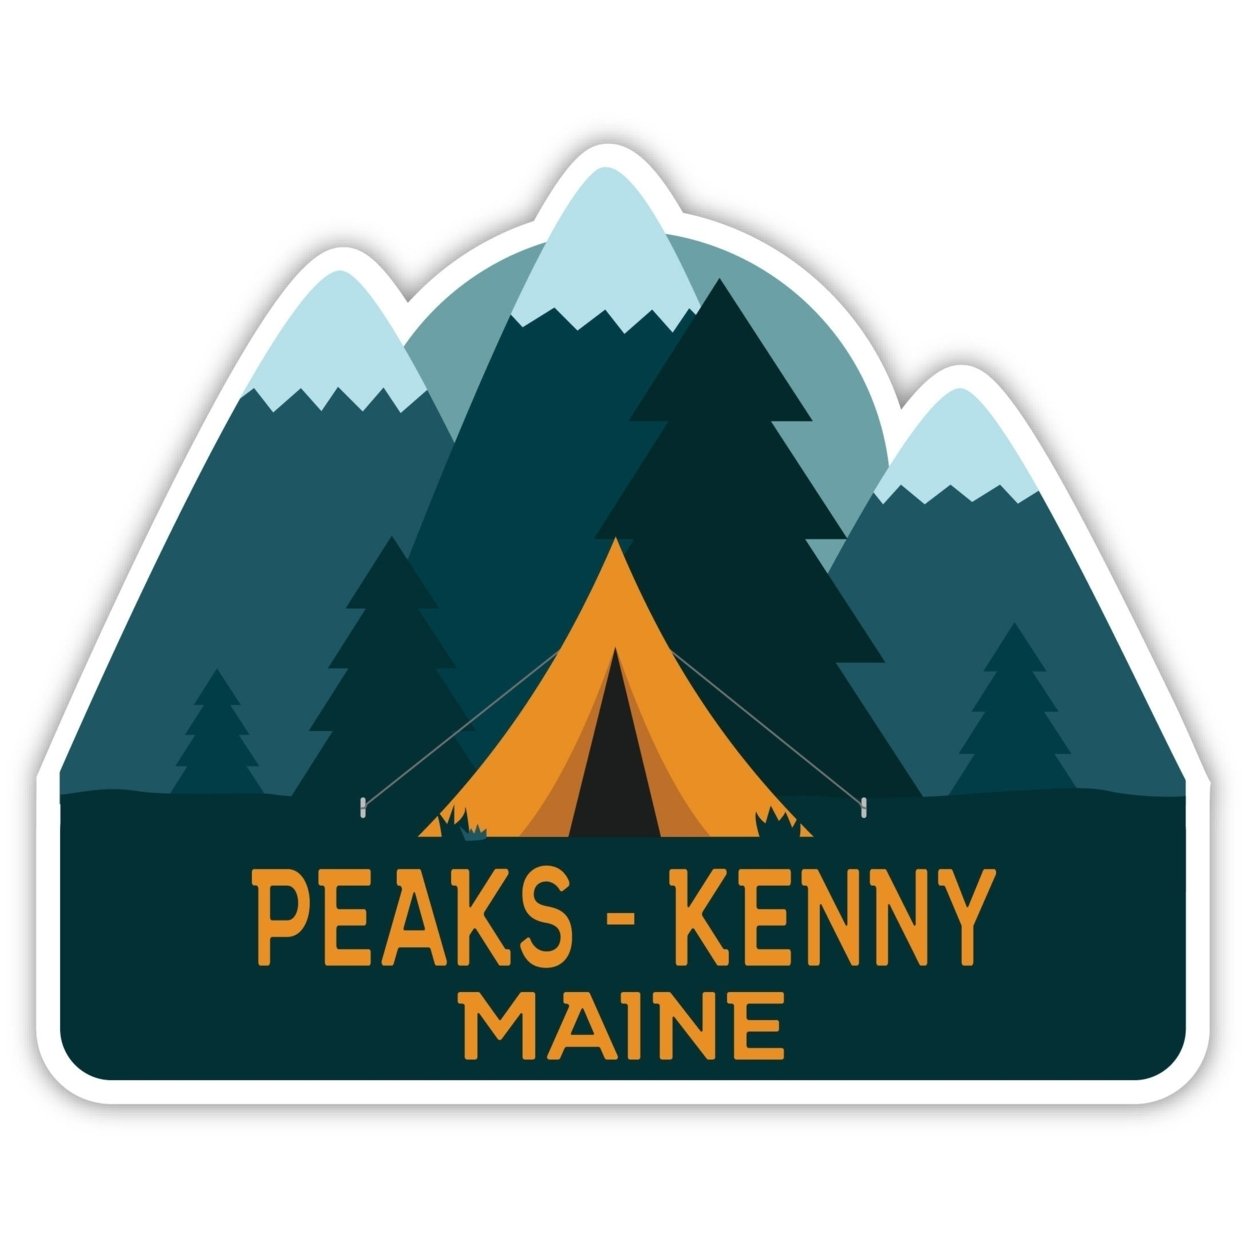 Peaks - Kenny Maine Souvenir Decorative Stickers (Choose Theme And Size) - Single Unit, 2-Inch, Tent